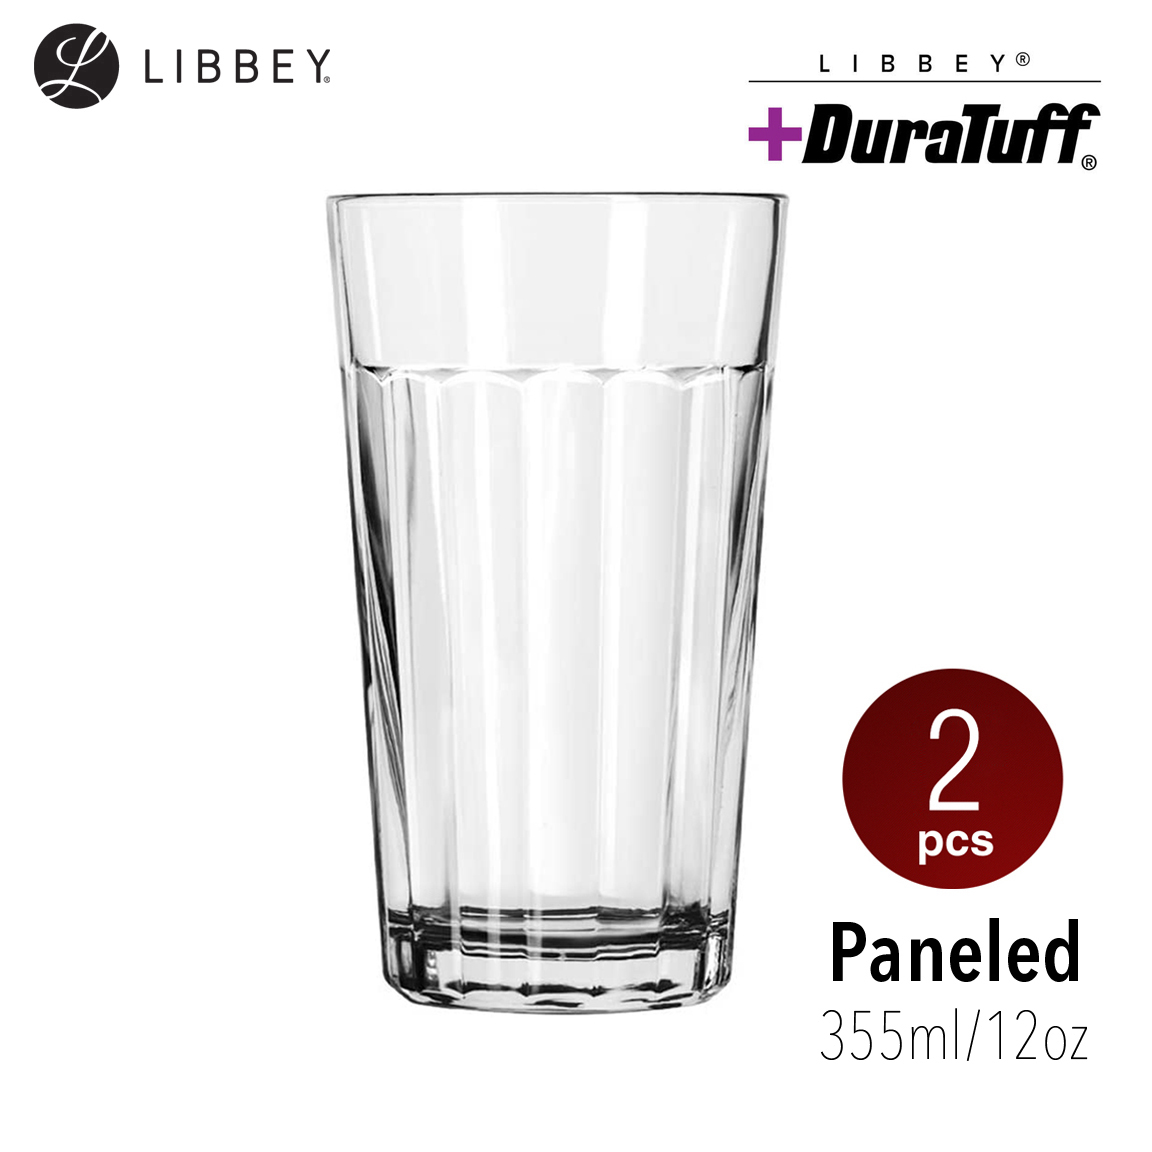 Libbey Paneled 15641 DuraTuff Glass Tumbler 355ml/12oz 2-pc Set